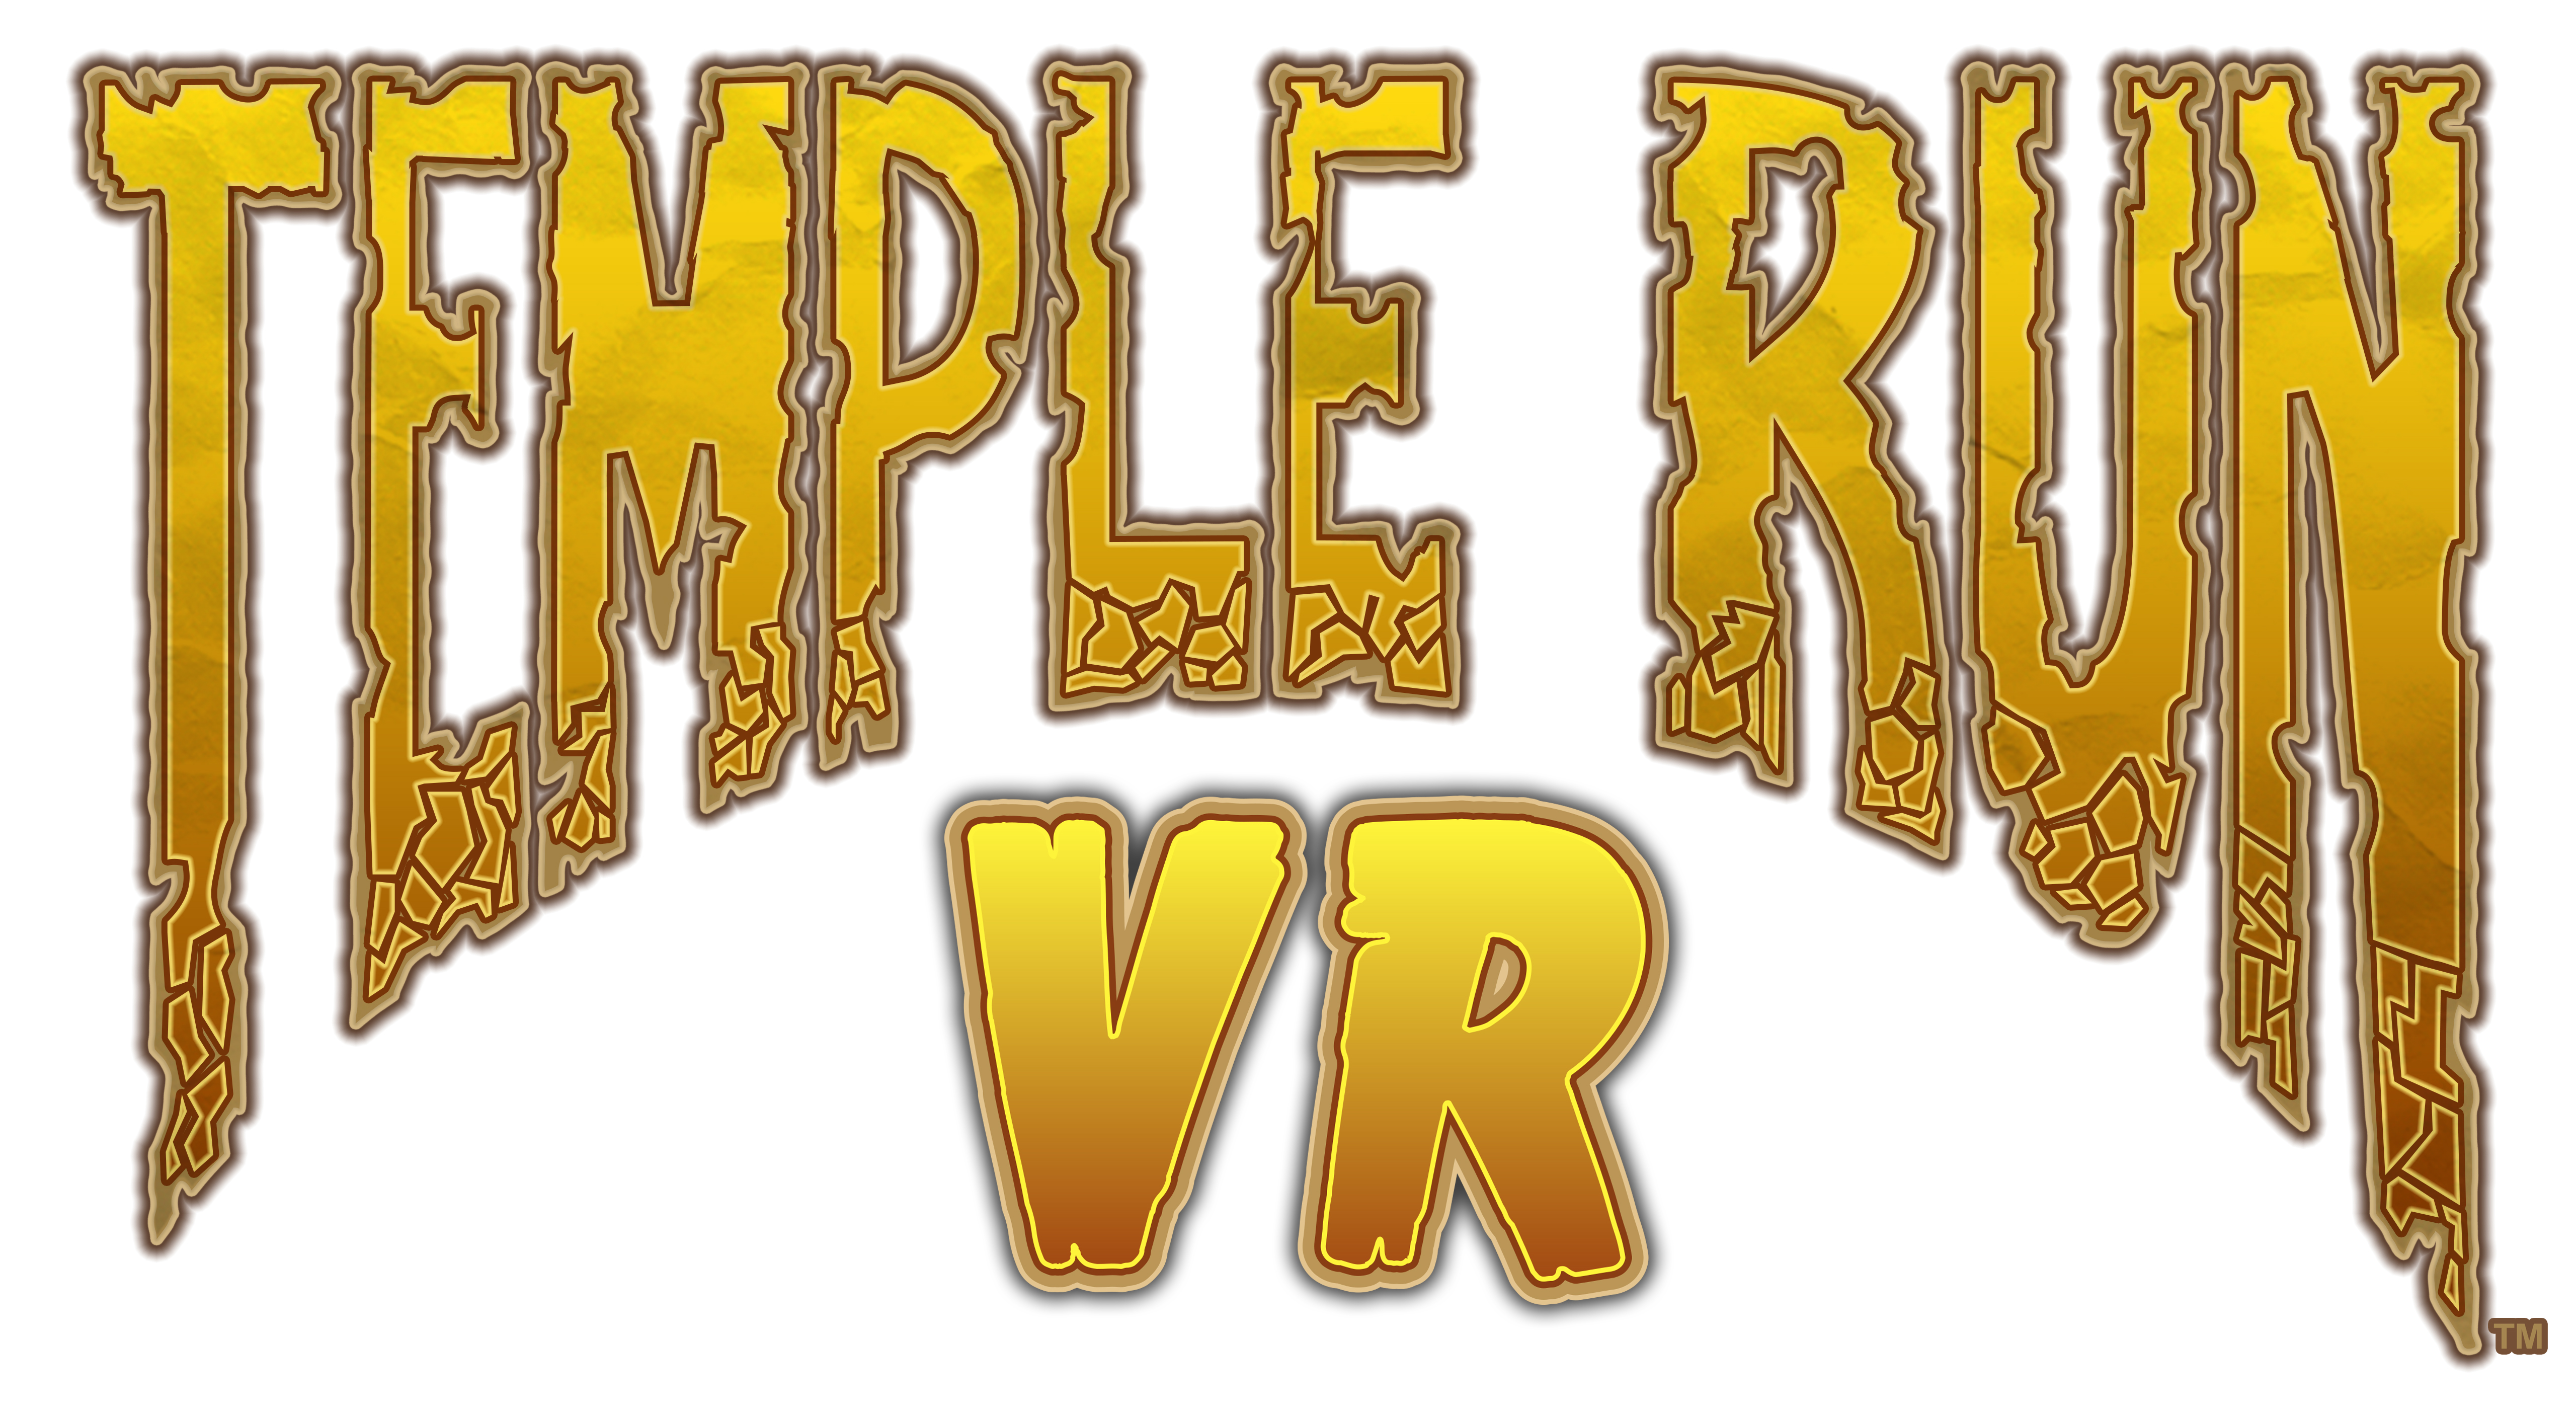 Maladroit Pidgin Stol Imangi Studios Announces Temple Run VR for Samsung Gear VR - TriplePoint  Newsroom